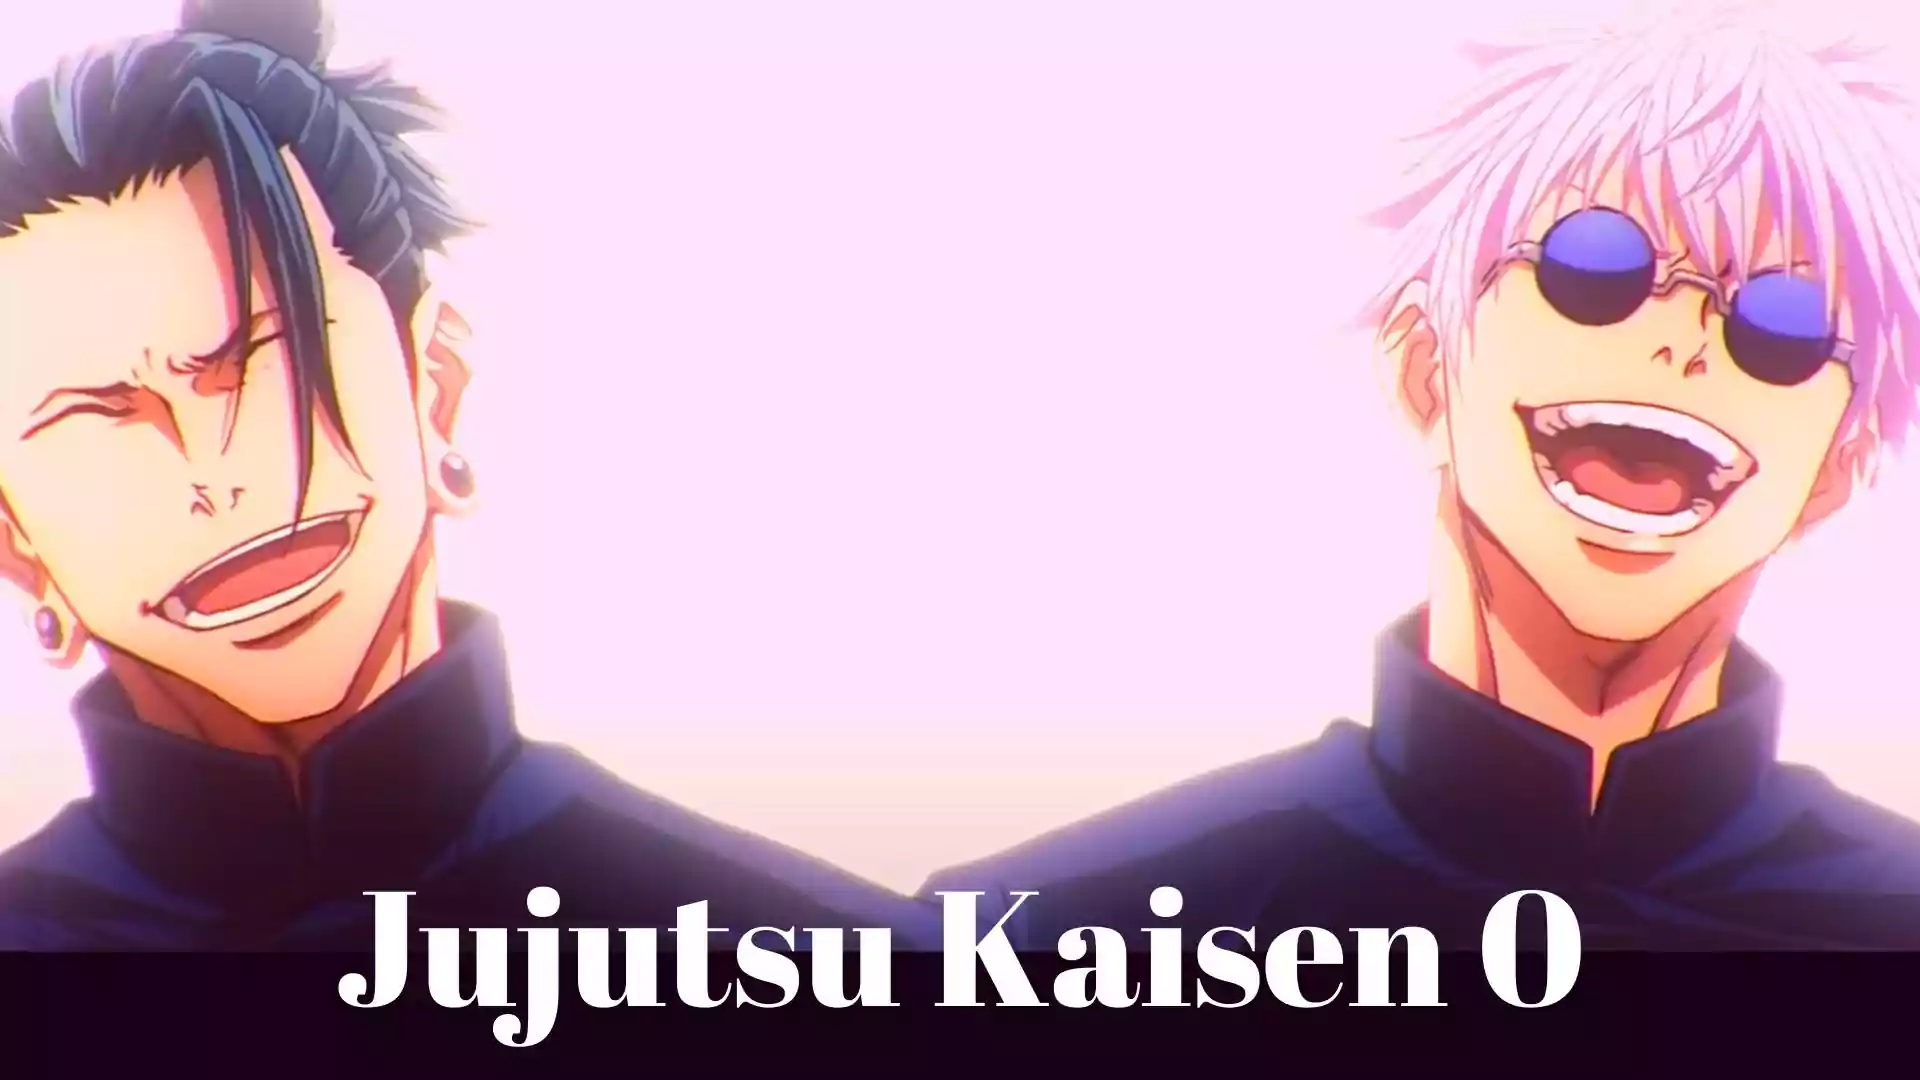 Jujutsu Kaisen 0 post credit scenes image (1)